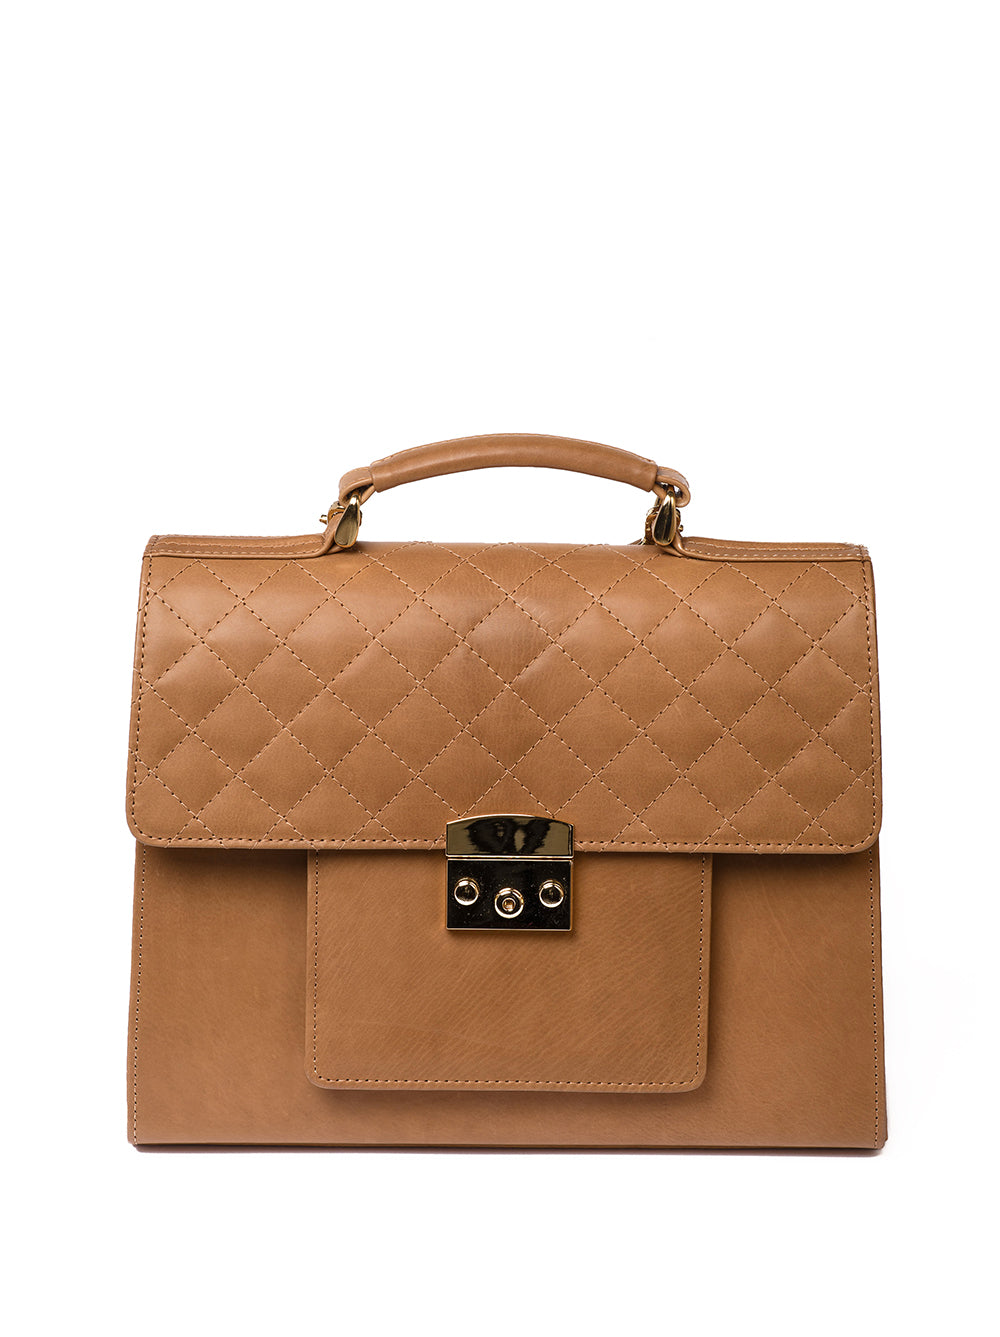 Quilted leather handbag - Camel